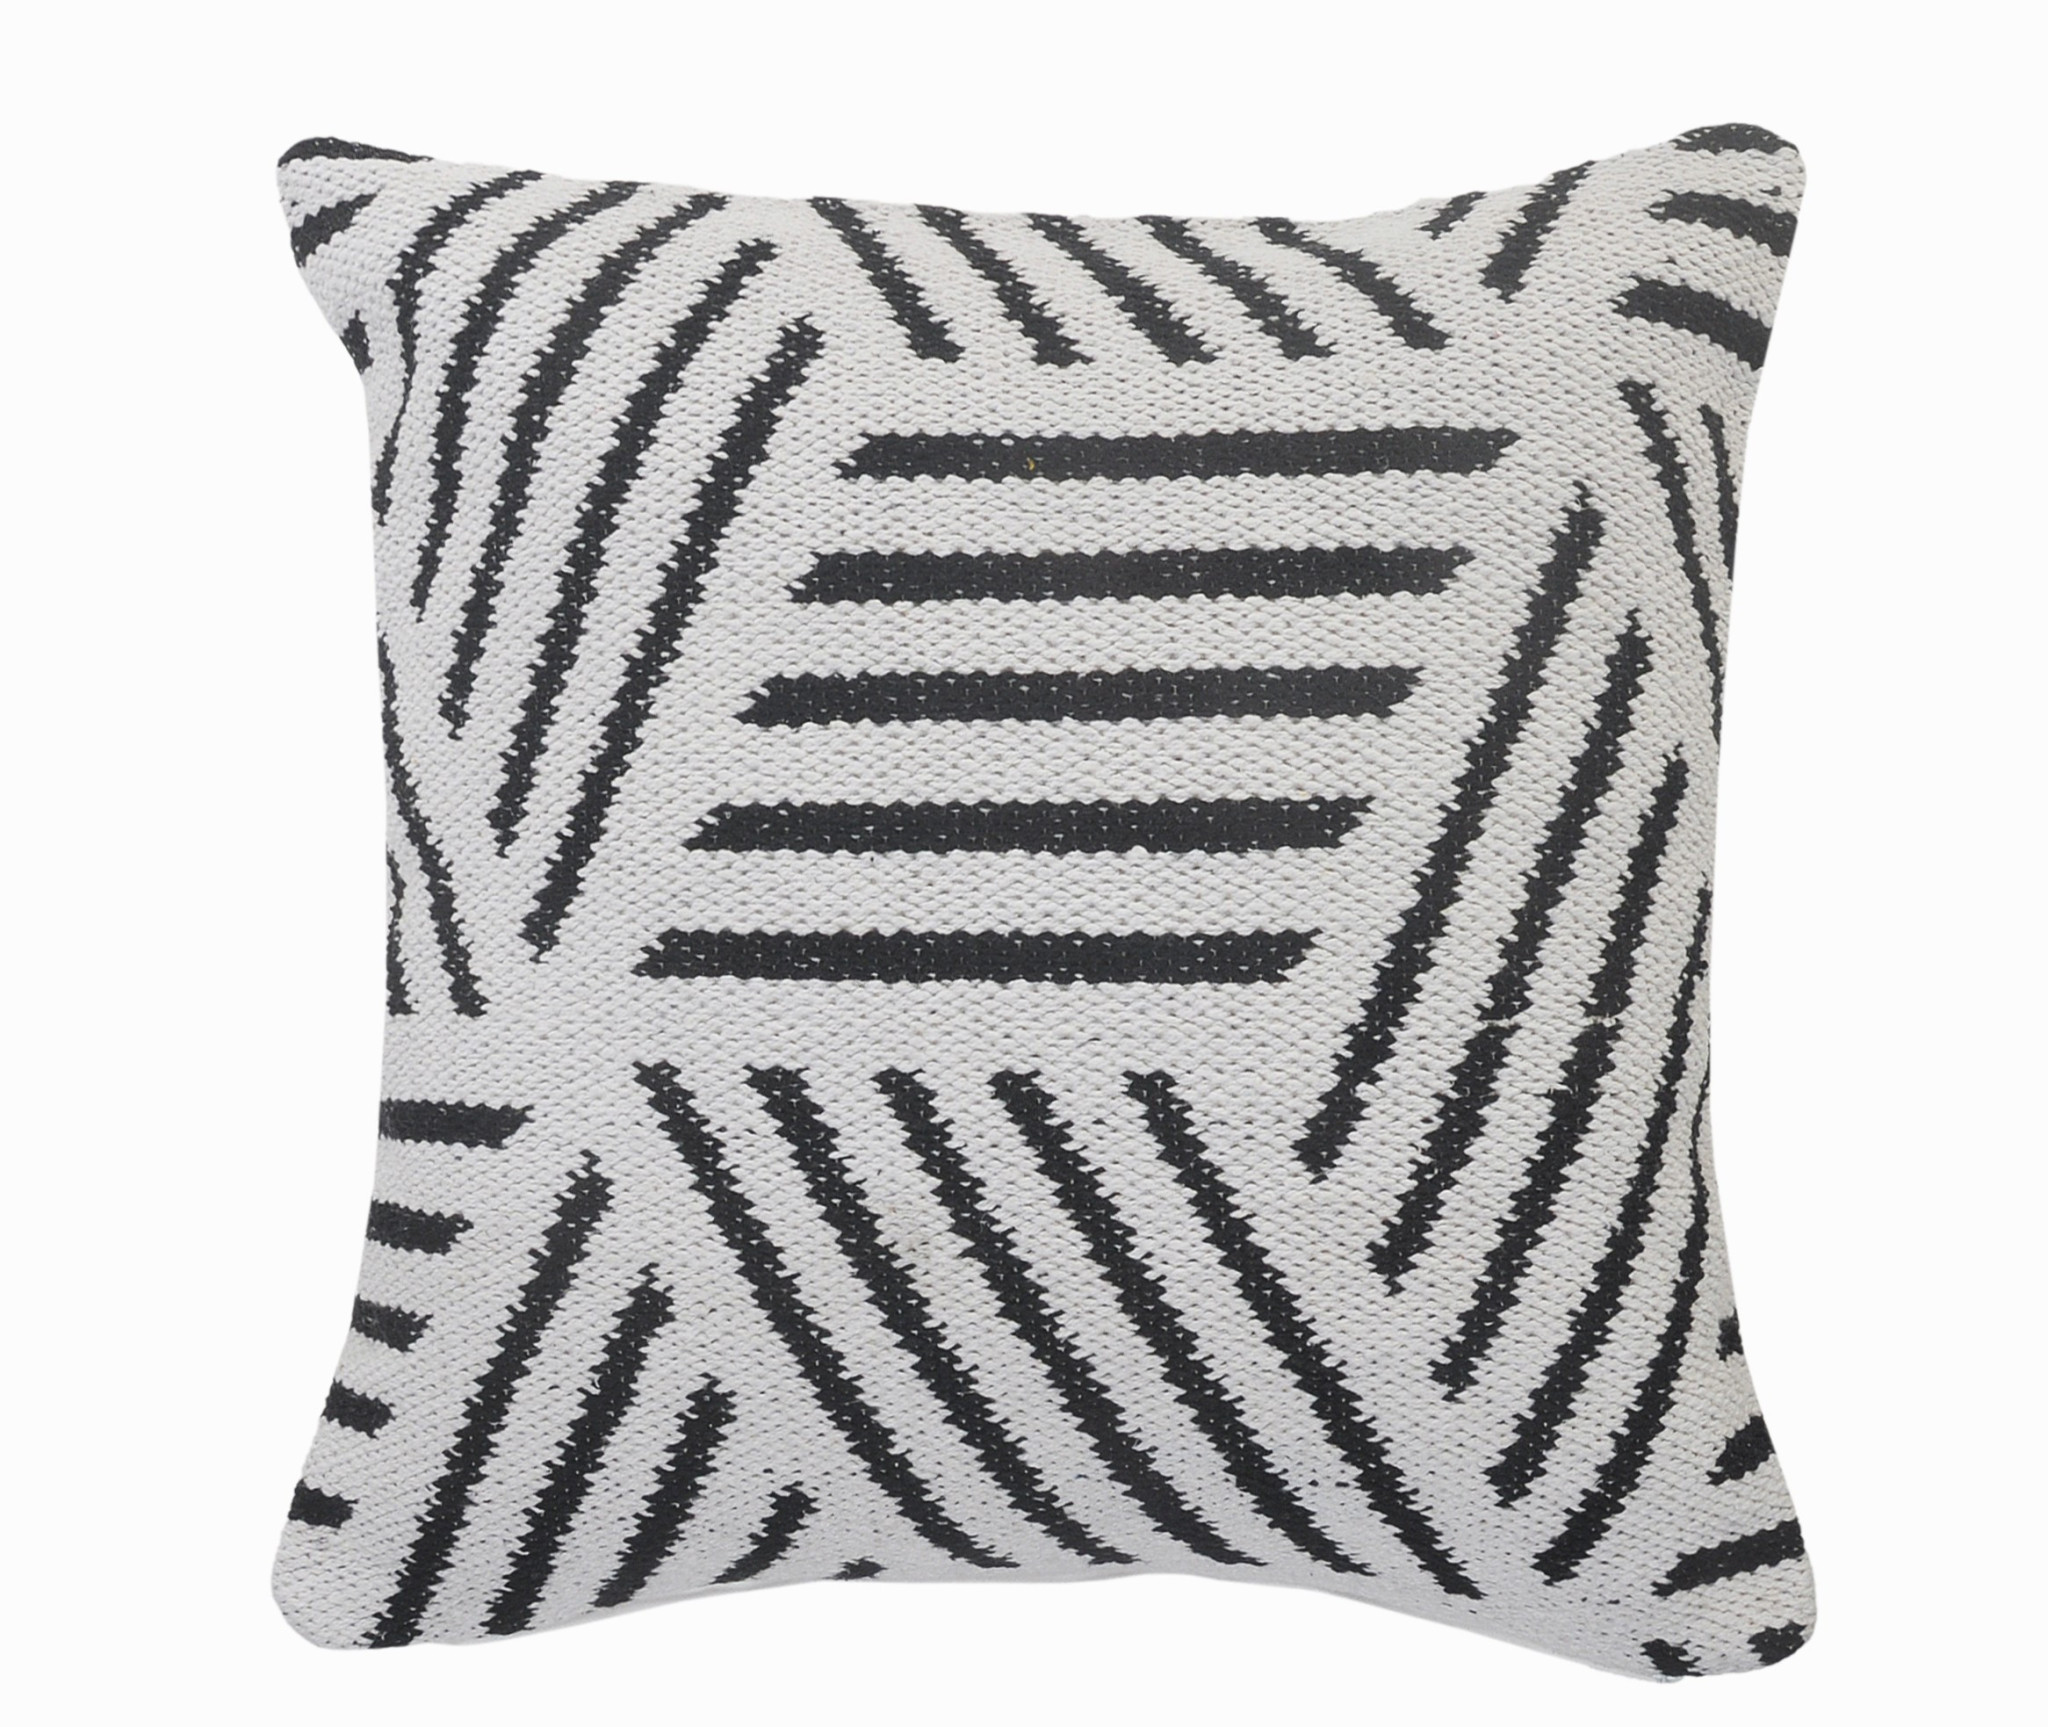 20" X 20" Black And White 100% Cotton Geometric Zippered Pillow-516811-1